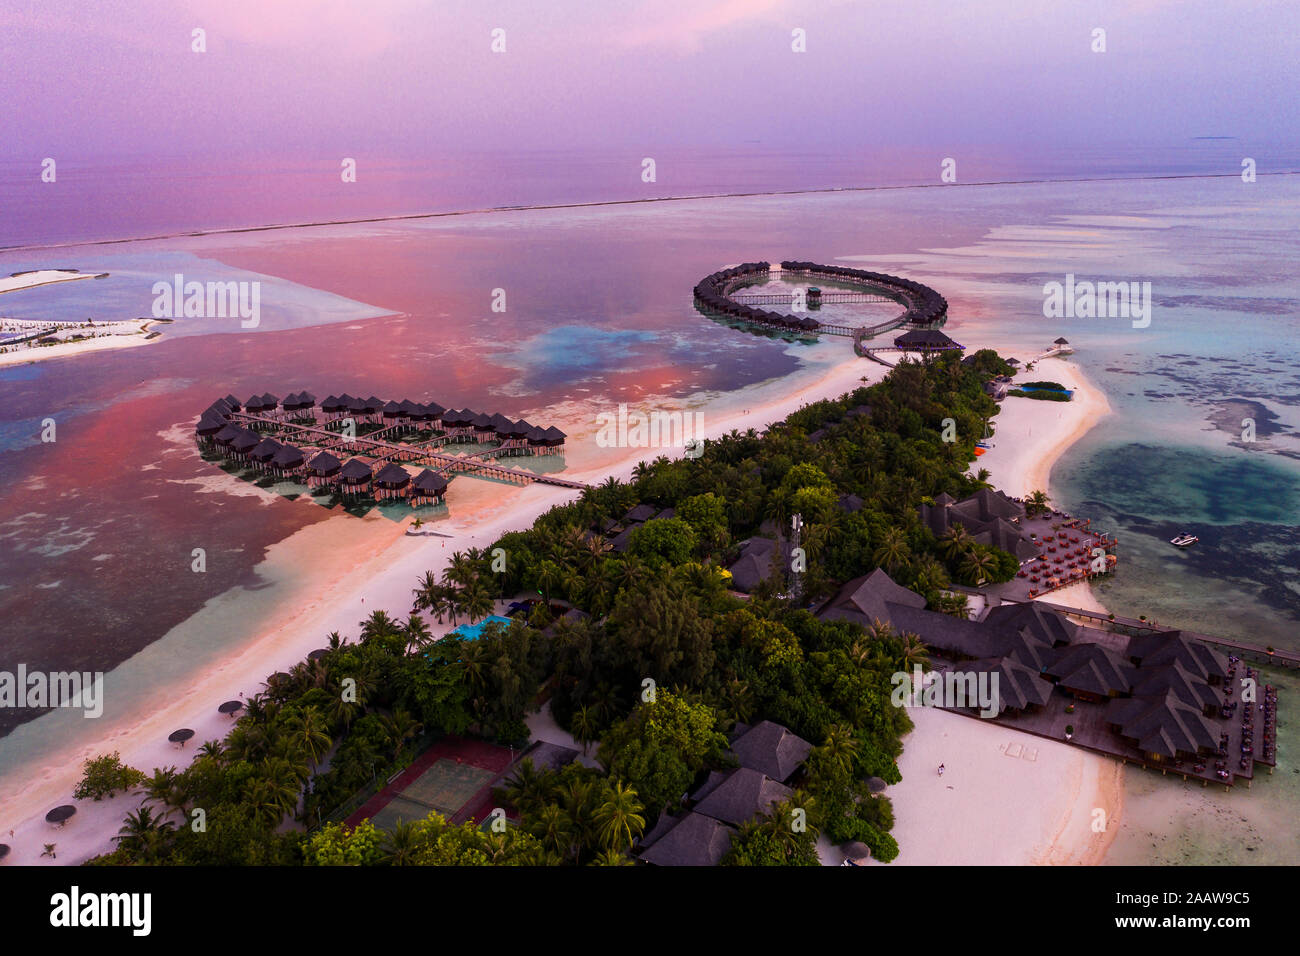 Aerial view of stilt houses at Olhuveli island during sunrise, Maldives Stock Photo